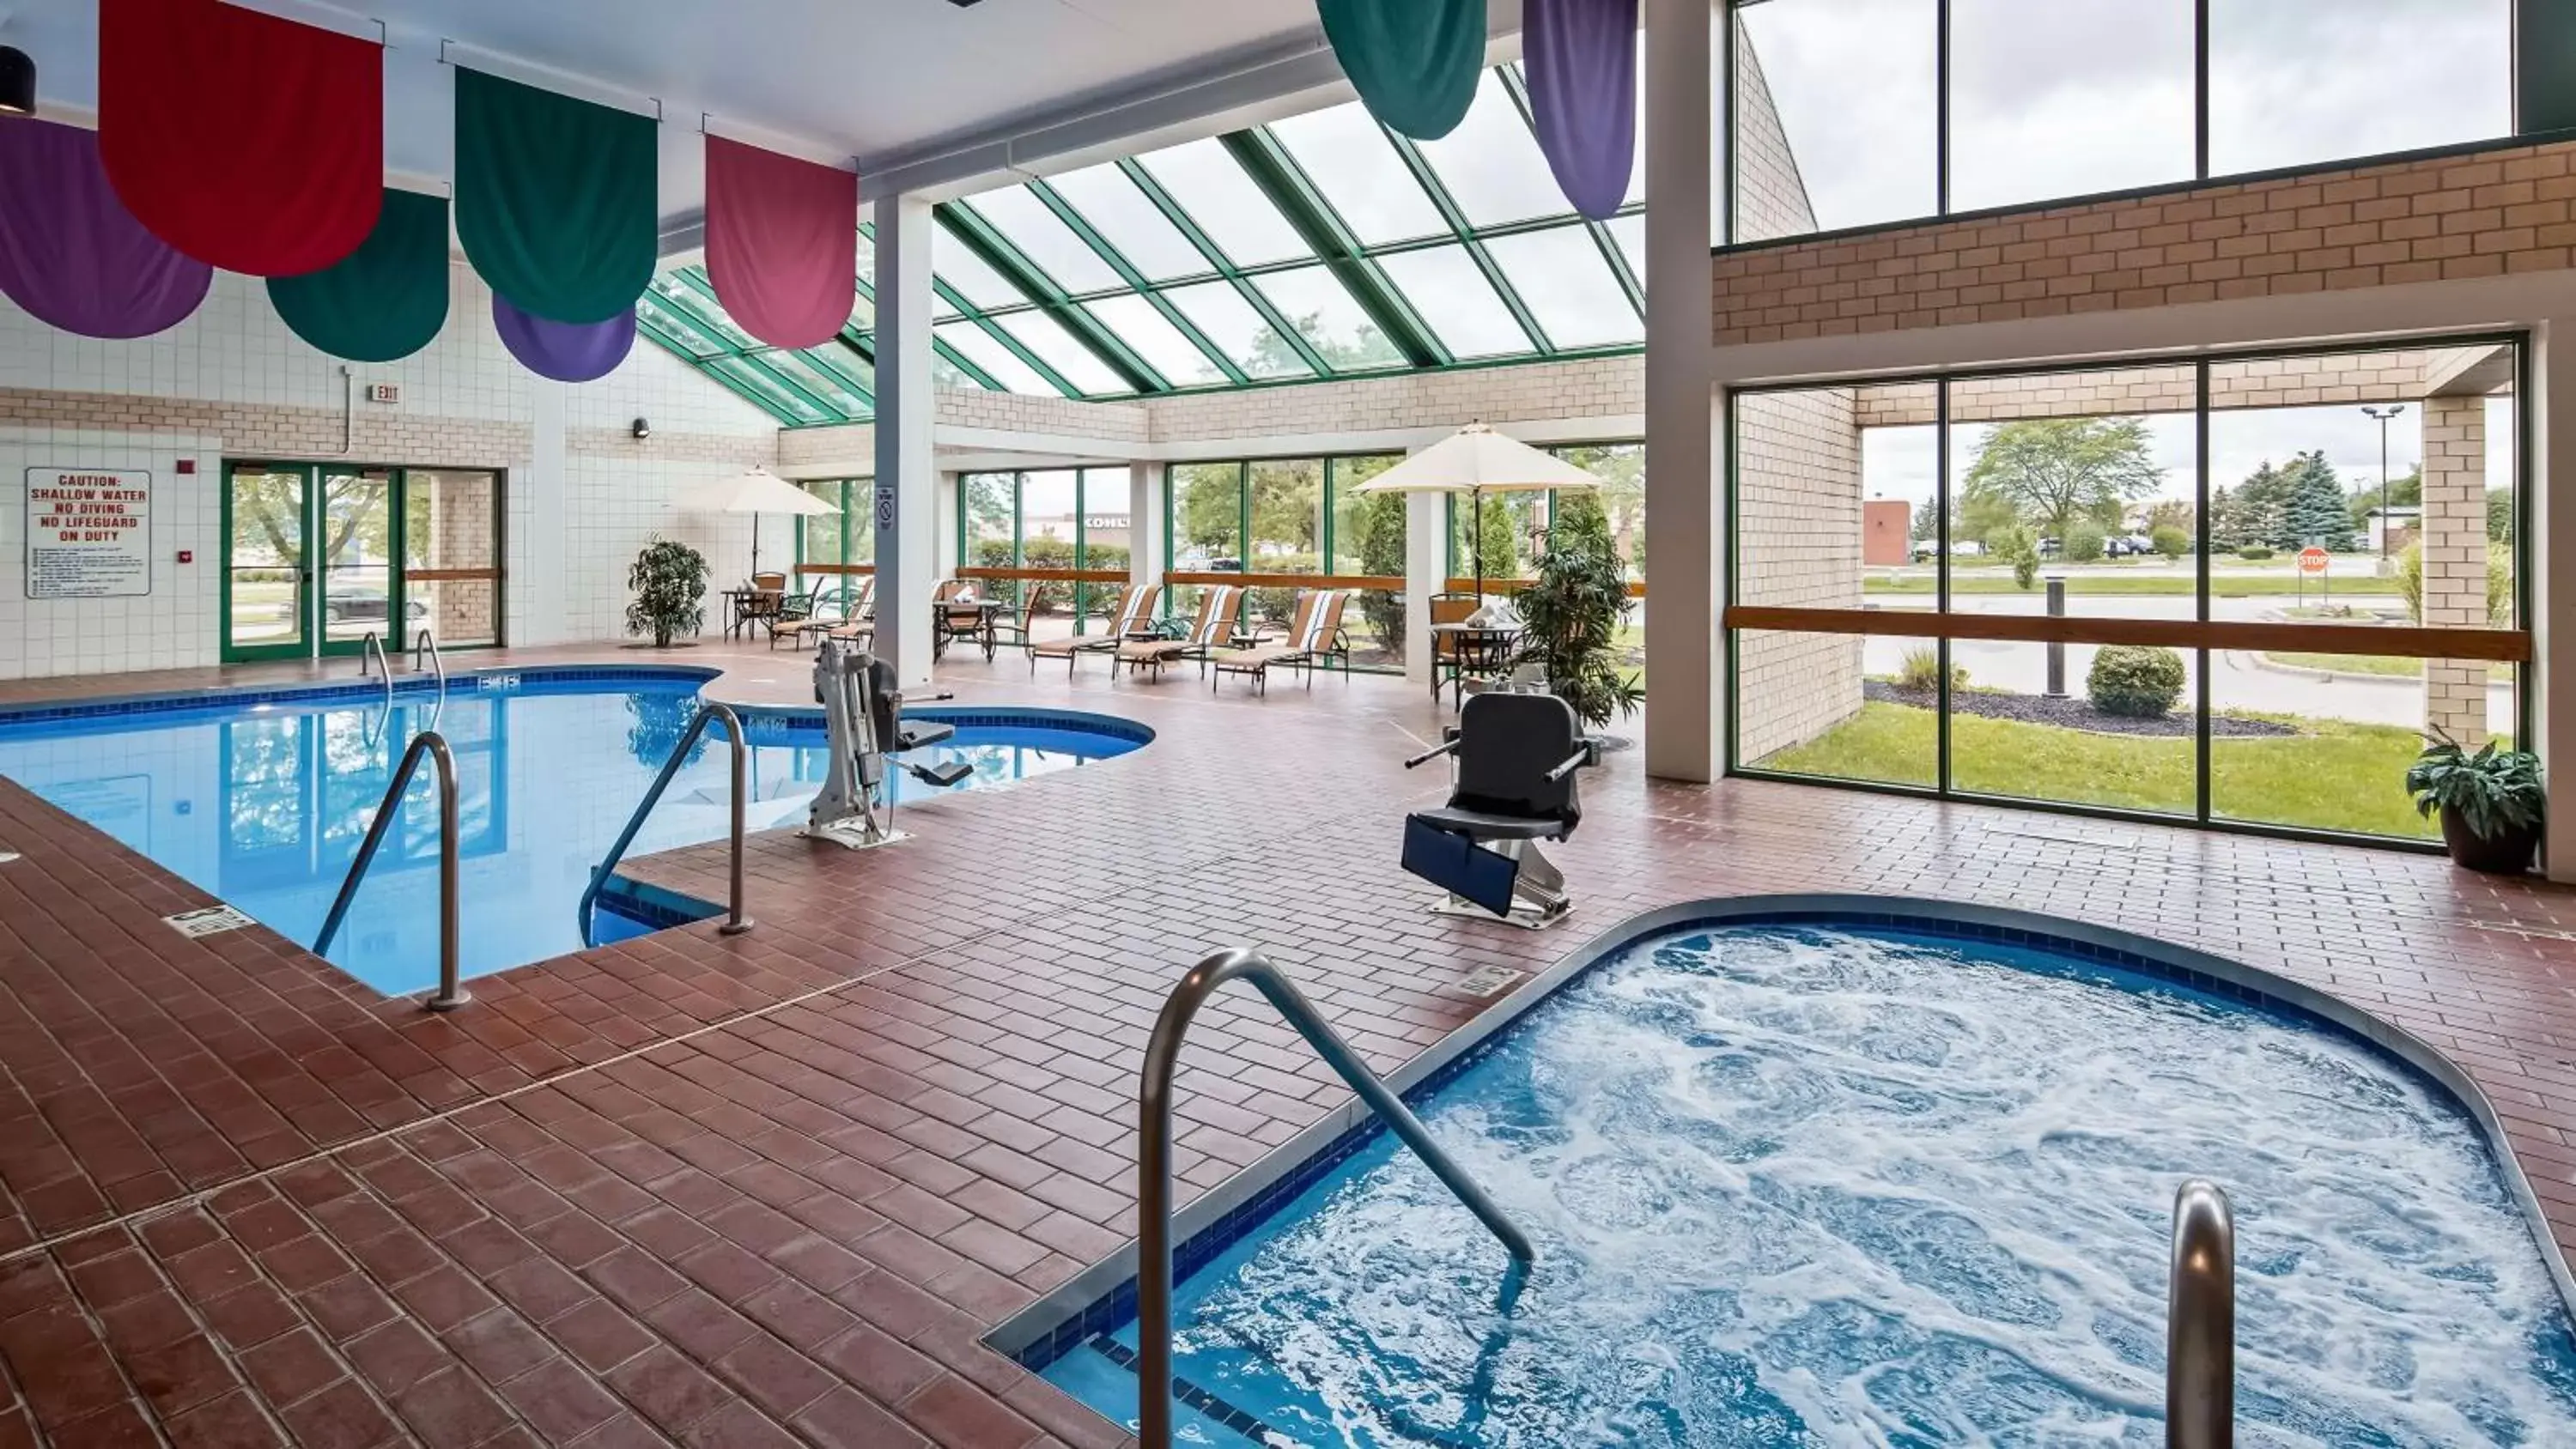 On site, Swimming Pool in Best Western East Towne Suites